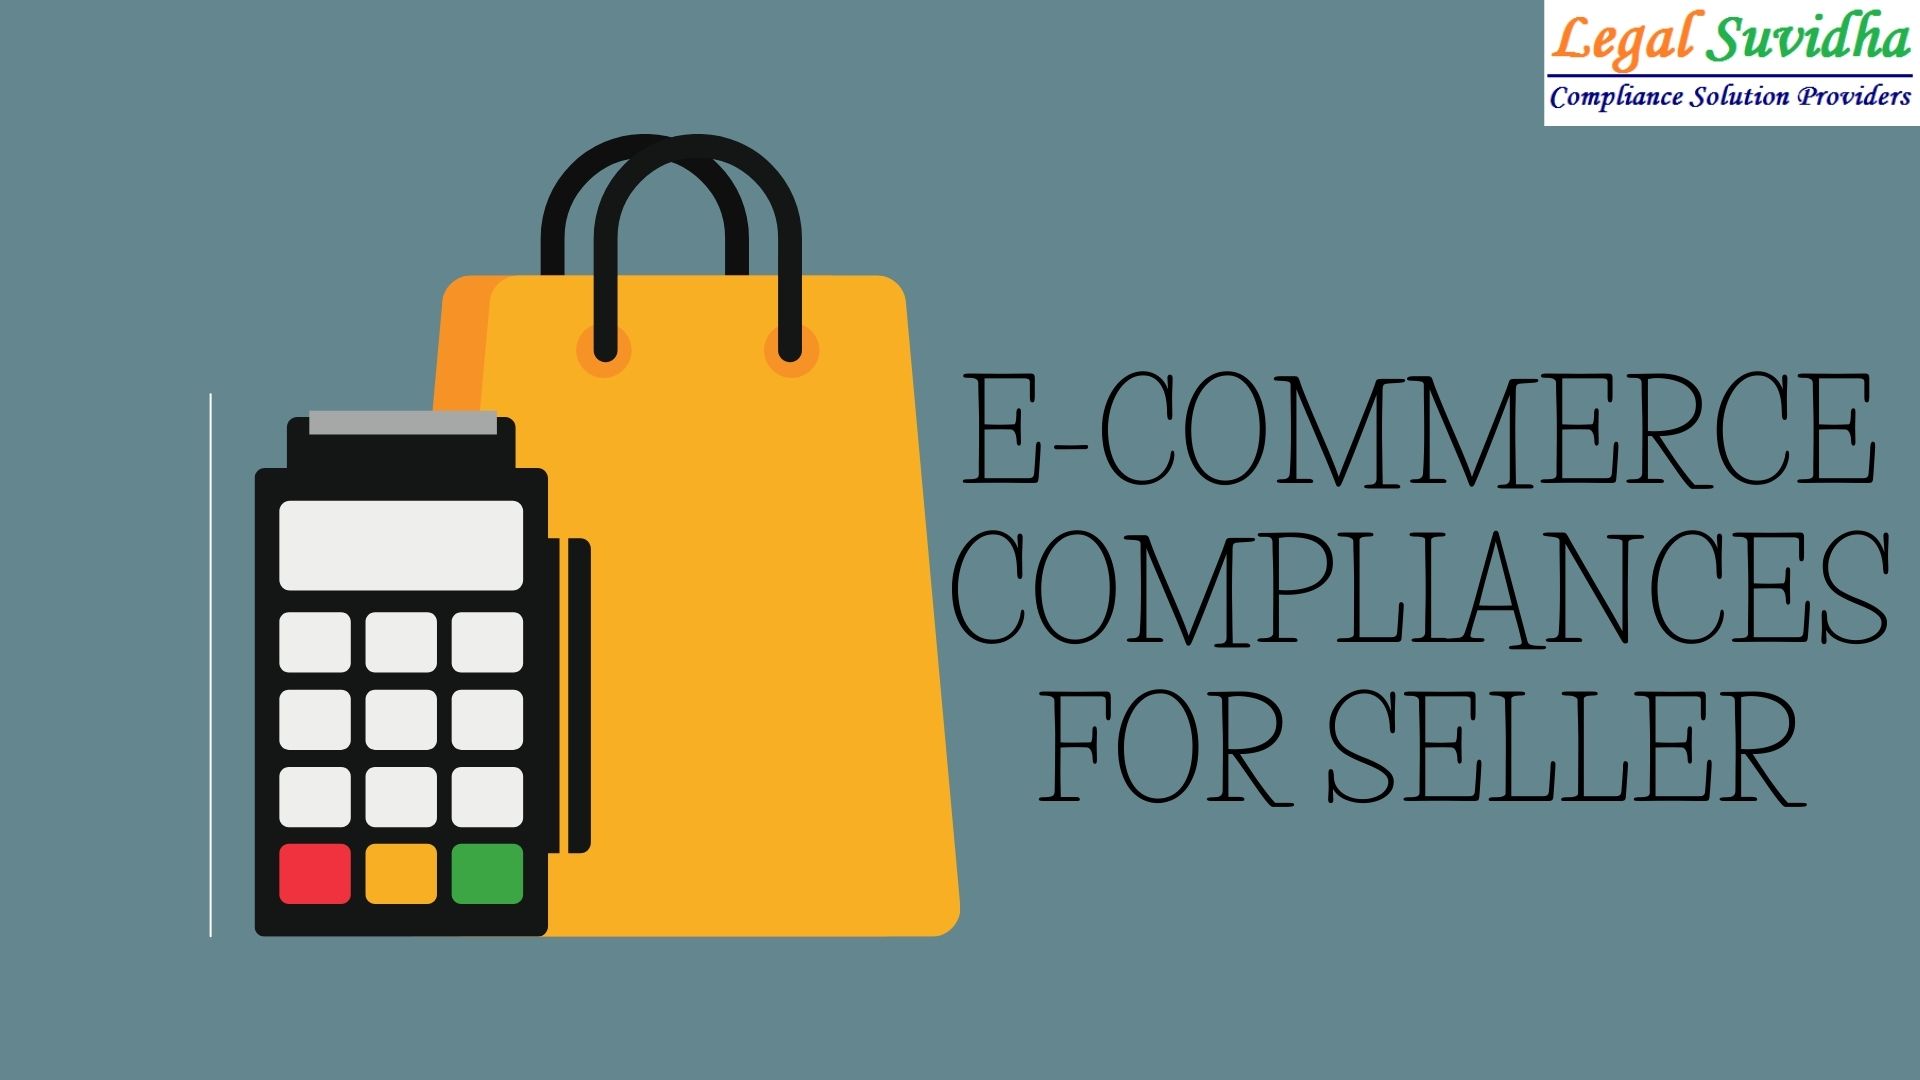 Compliances of E-commerce operator